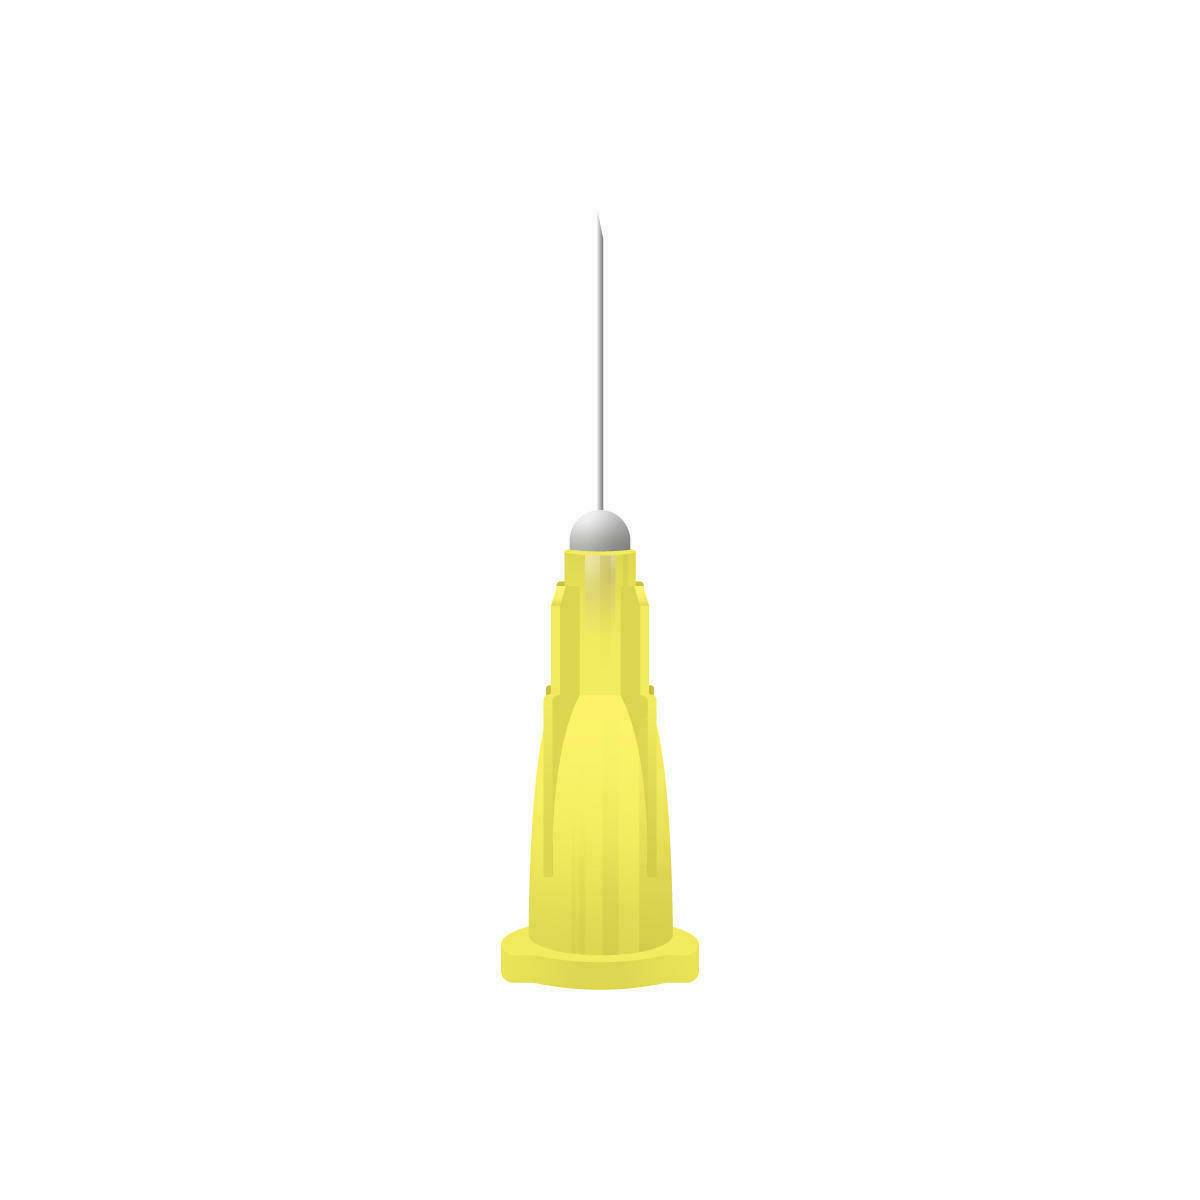 30g Yellow 0.5 inch Sol-M Needles